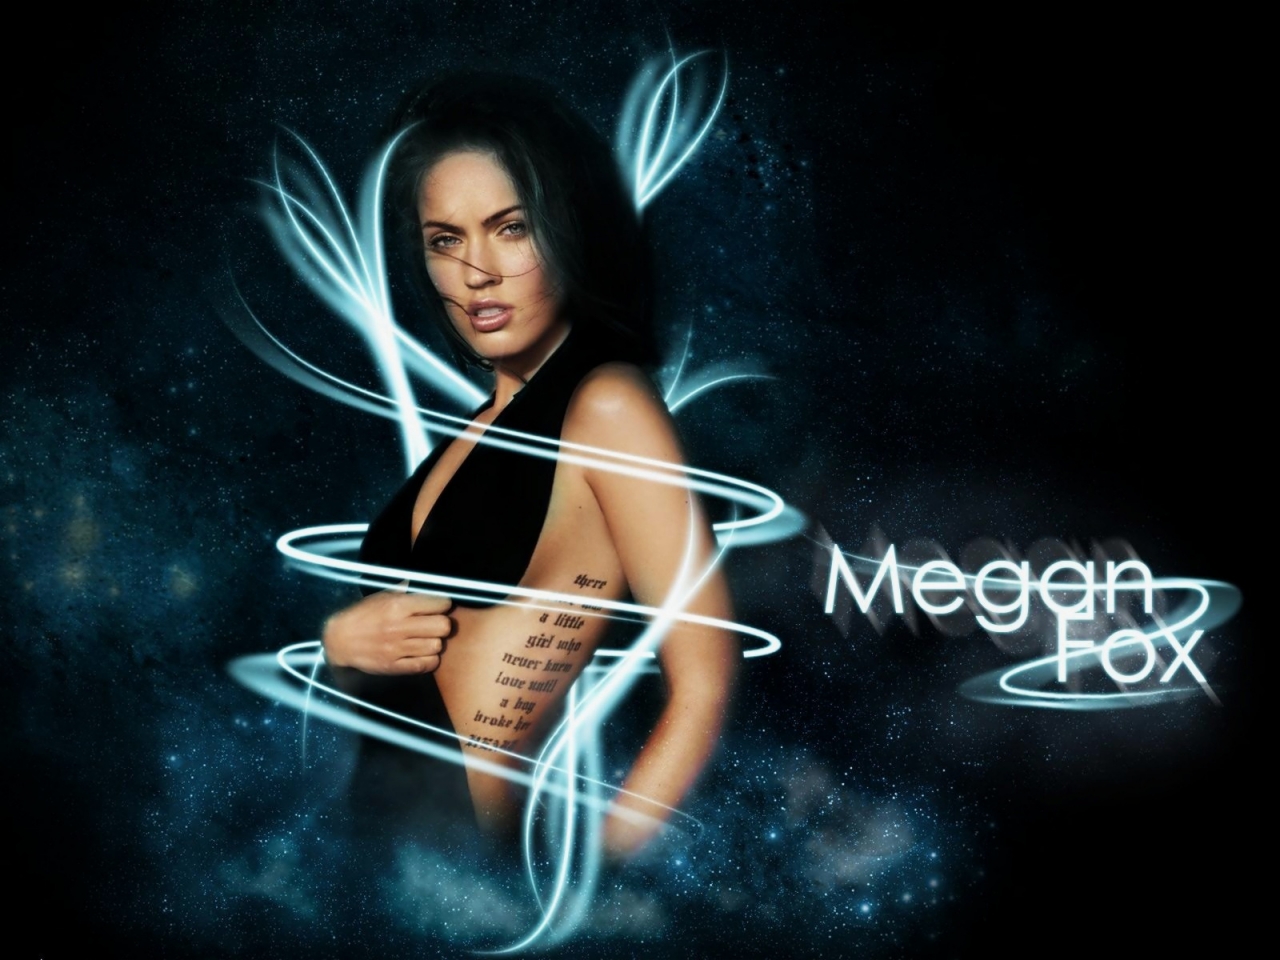 Megan Fox Between Light for 1280 x 960 resolution